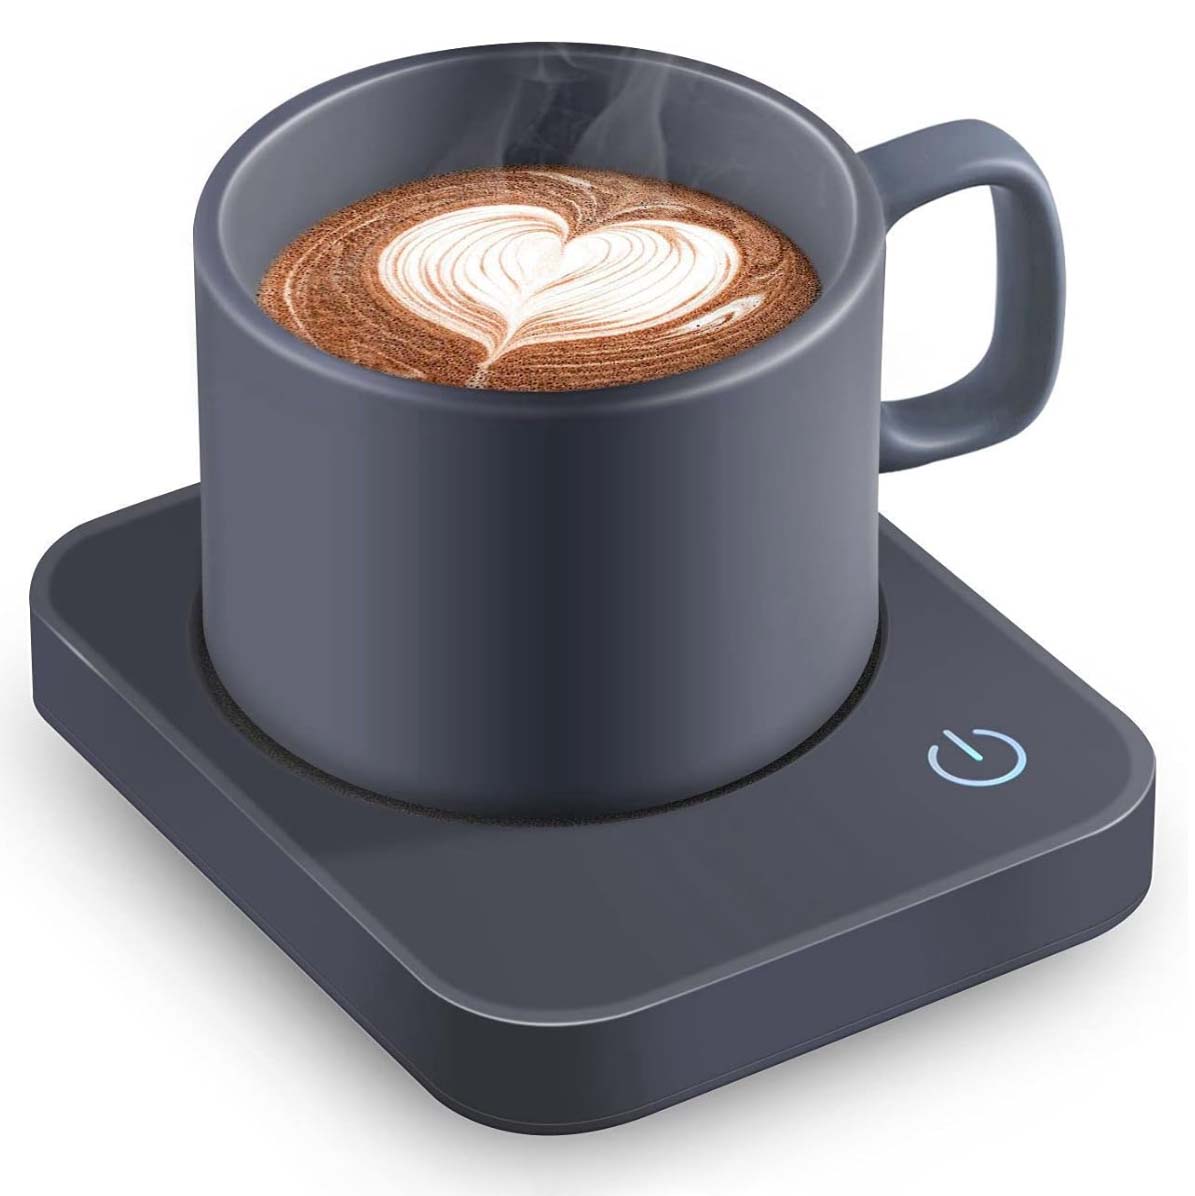 VOBAGA Coffee Mug Warmer